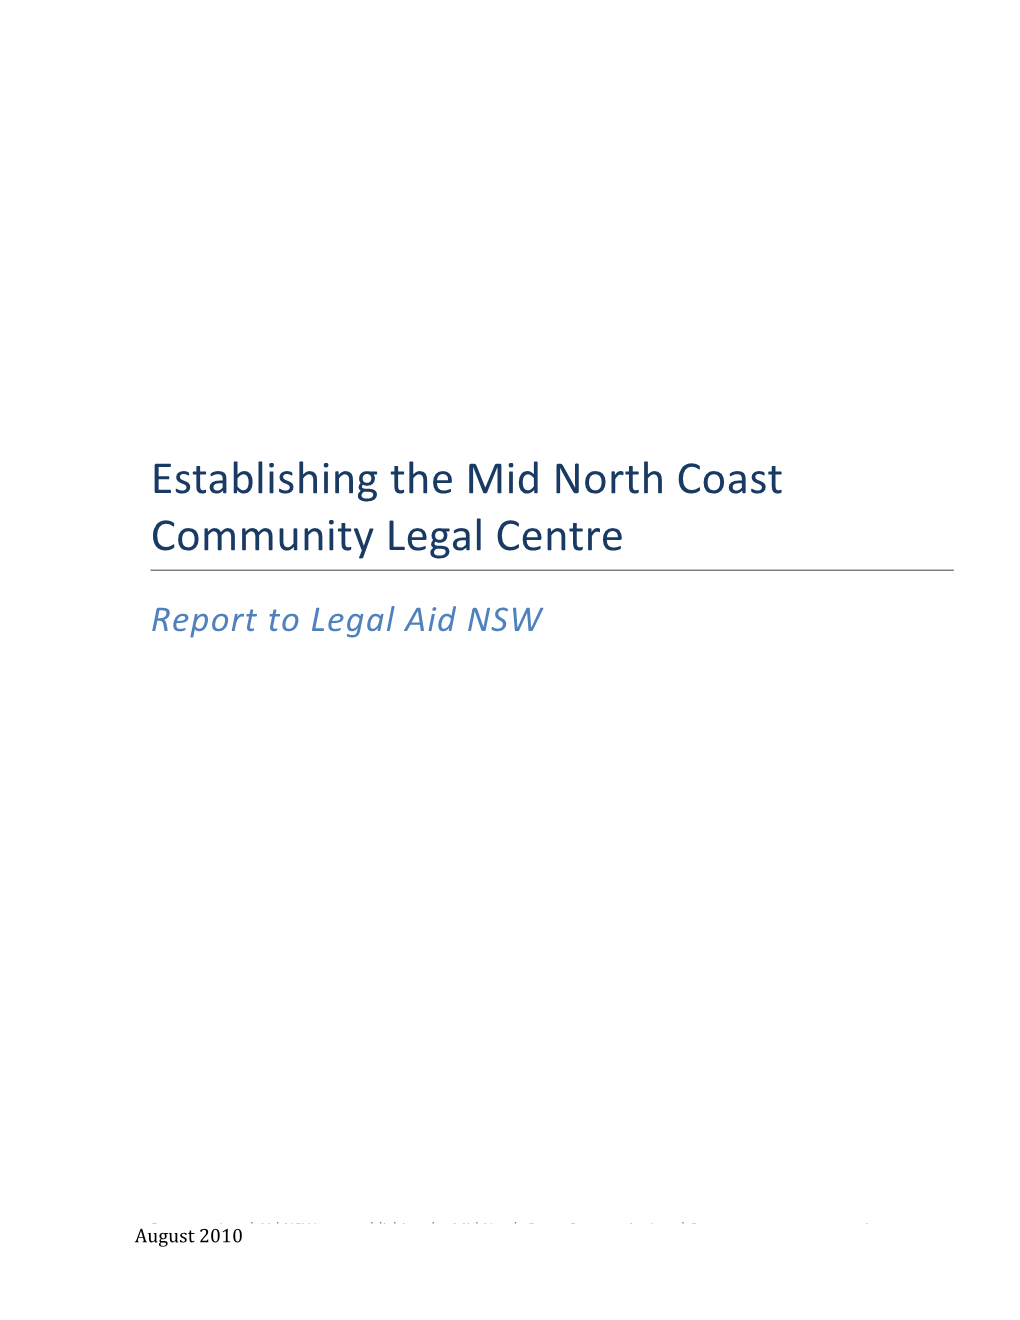 Establishing the Mid North Coast Community Legal Centre